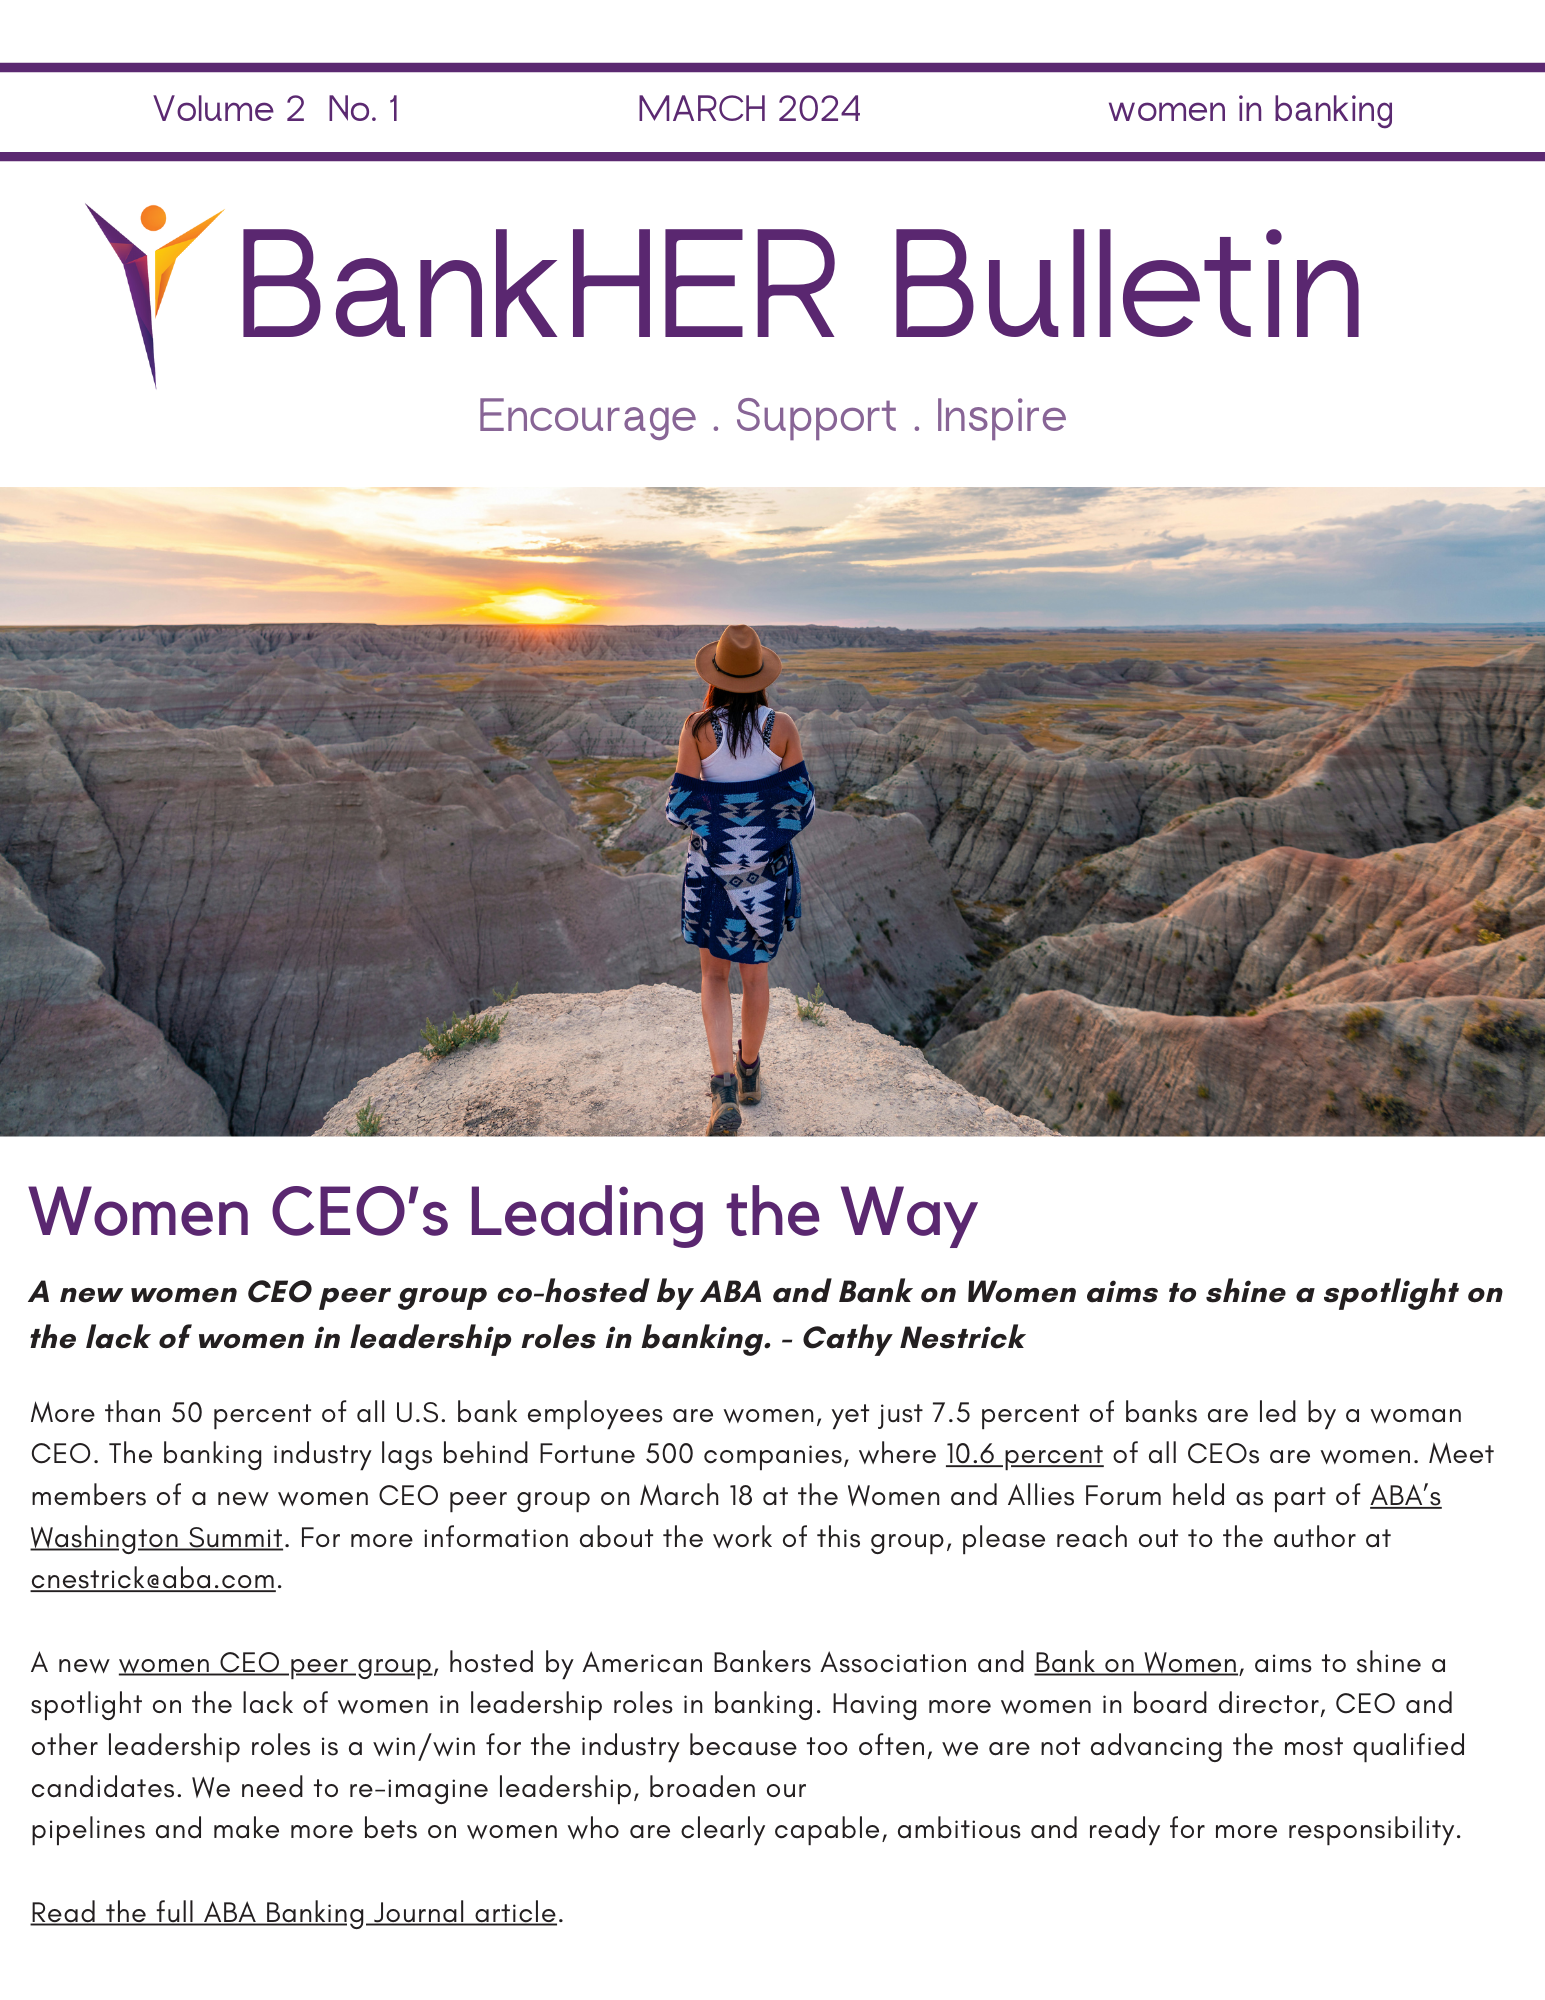 BankHER Bulletin